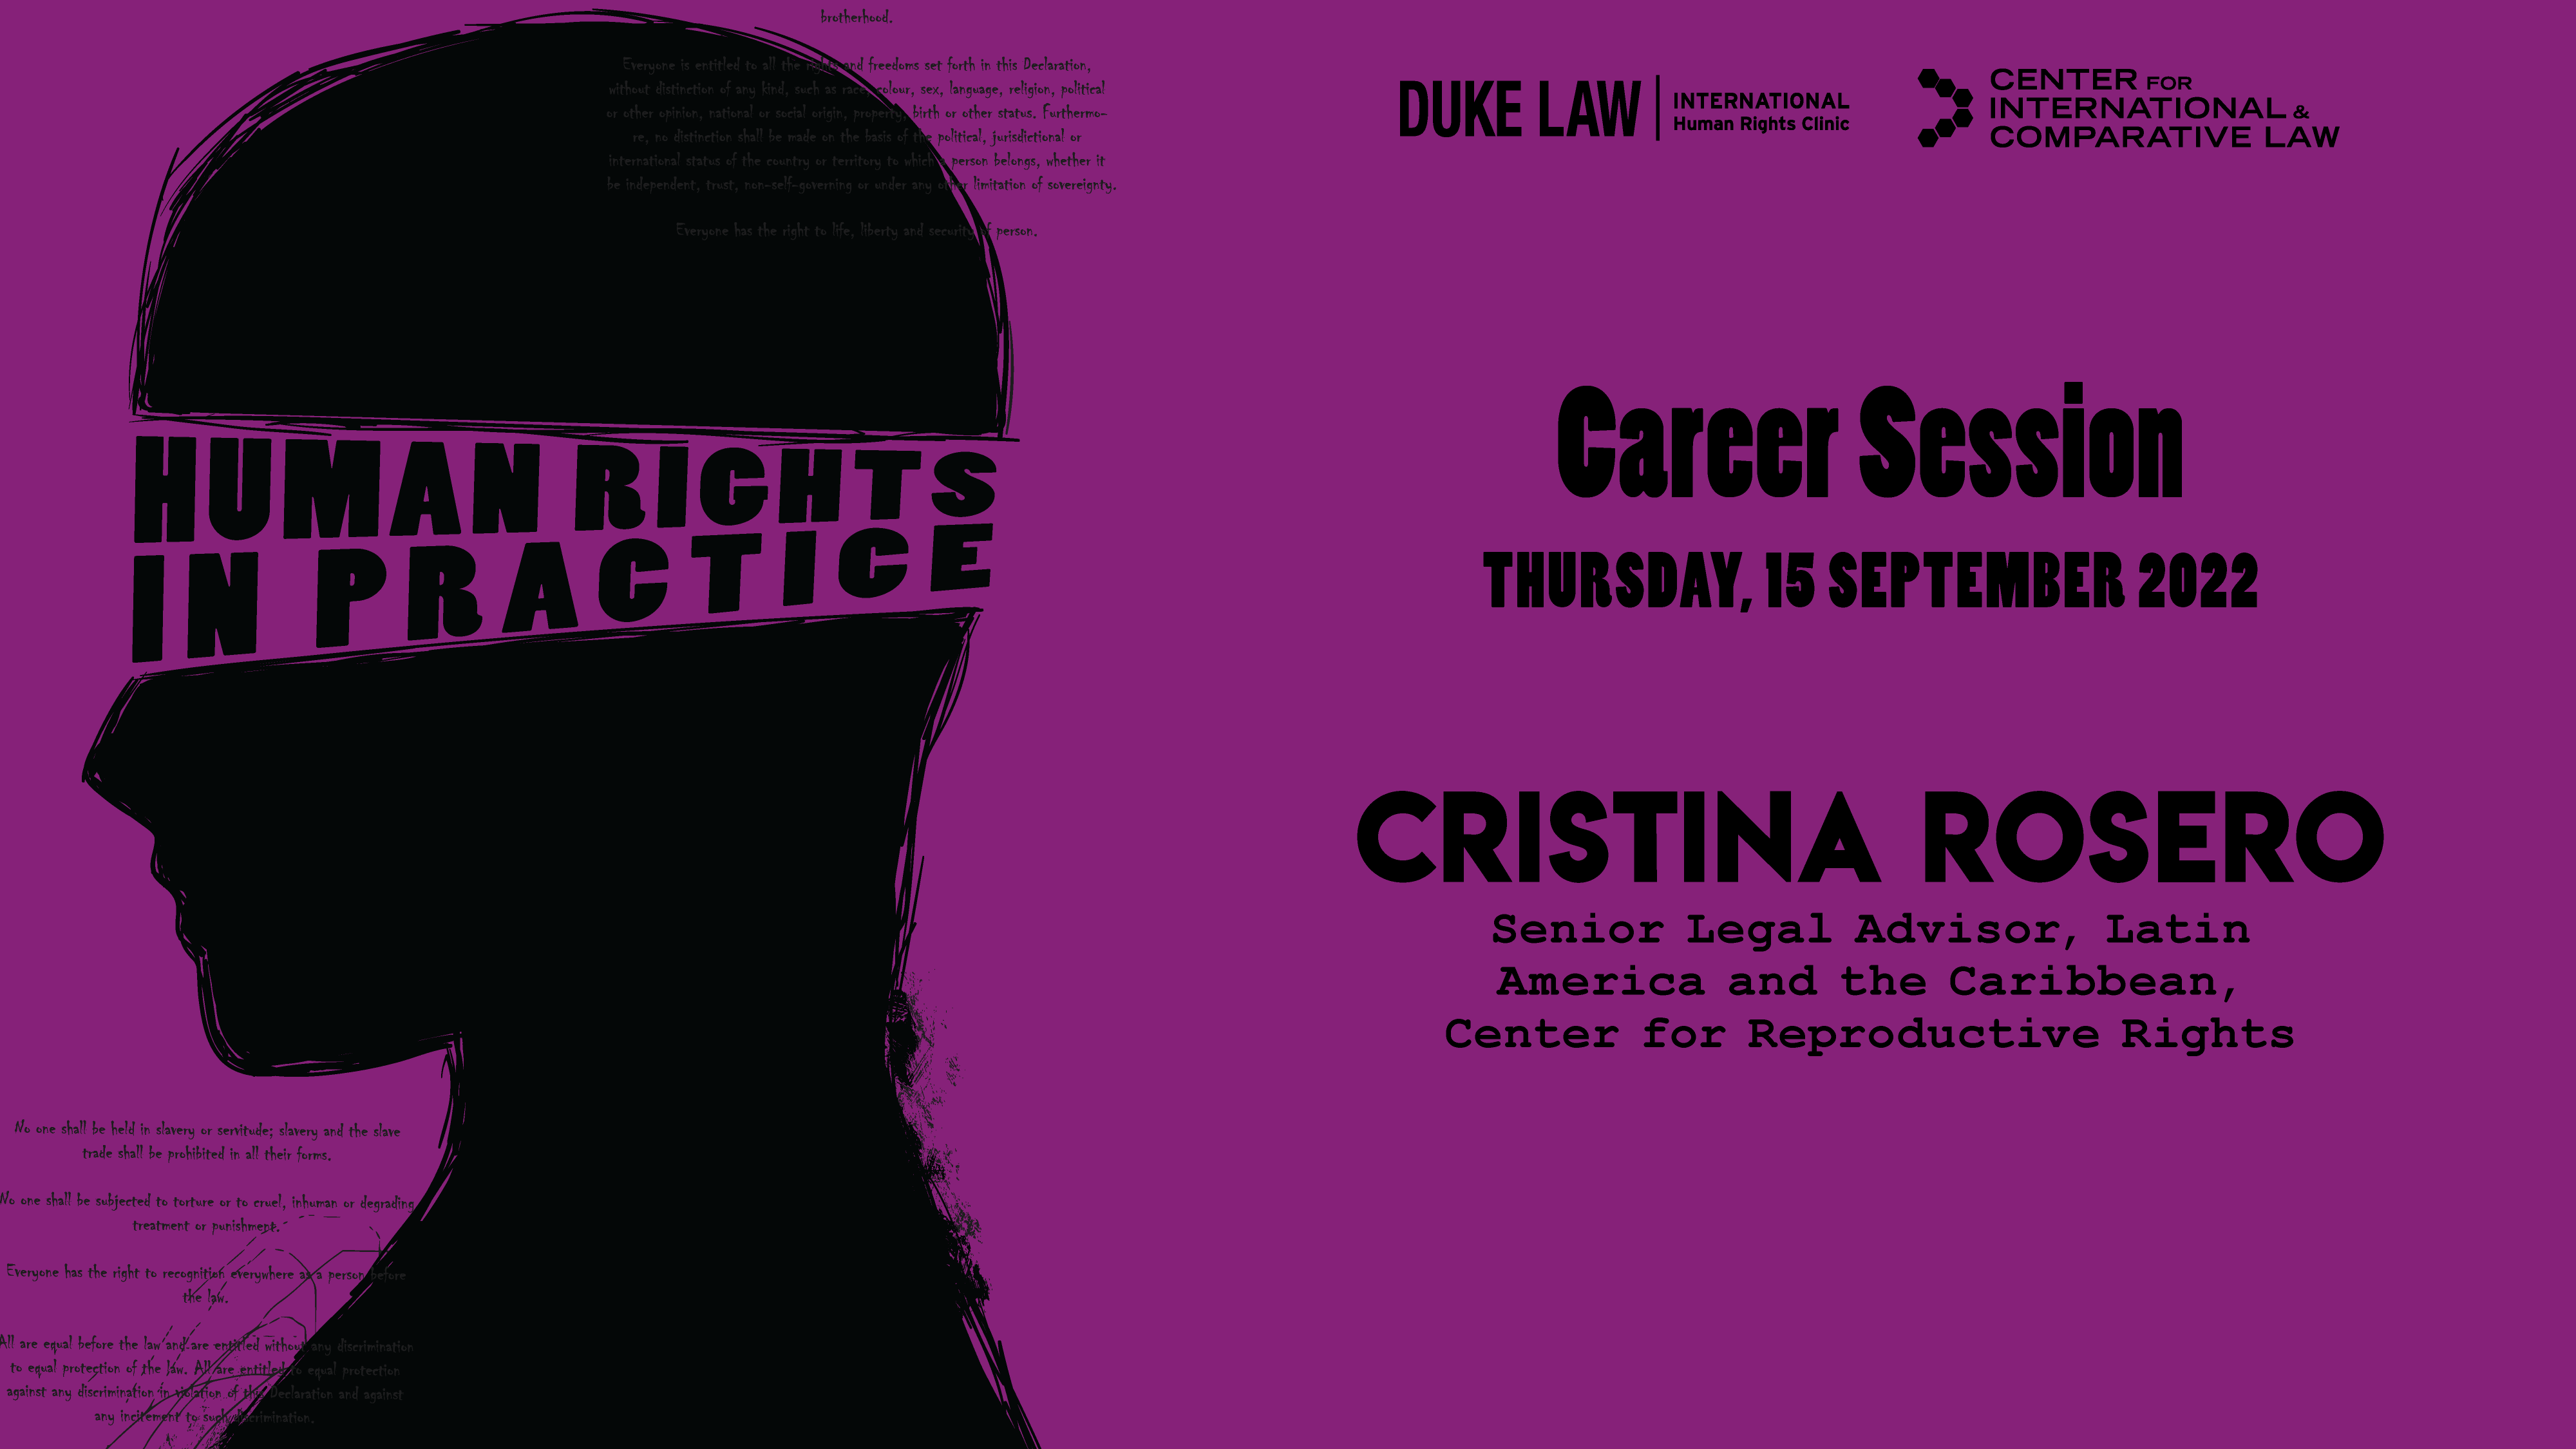 Career Session with Cristina Rosero, September 15, 2022, 1:30 p.m.